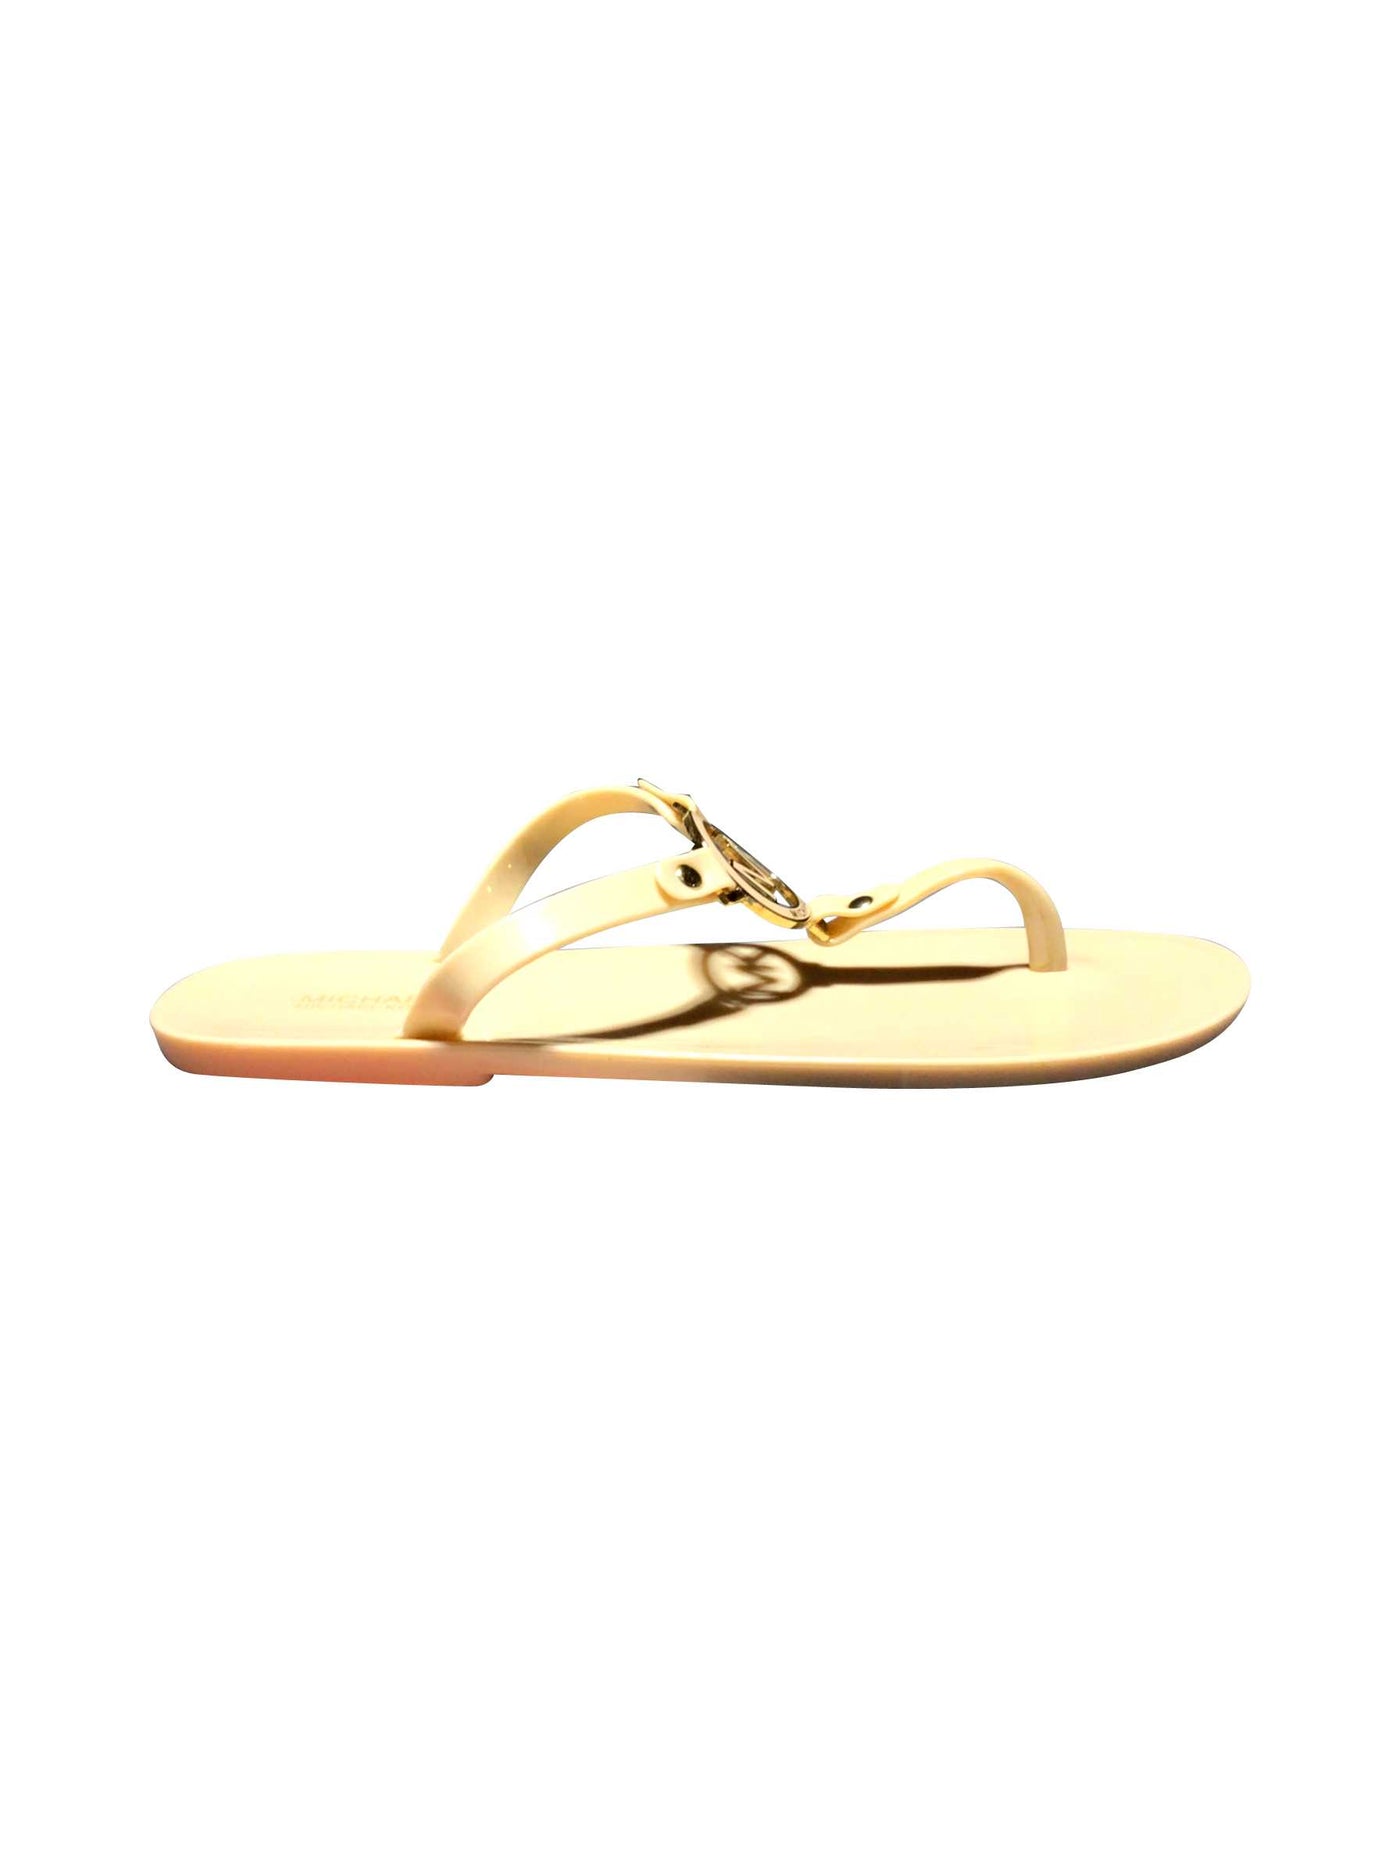 MICHAEL KORS Regular fit Sandals in Pink - Size 8 | 30.79 $ KOOP